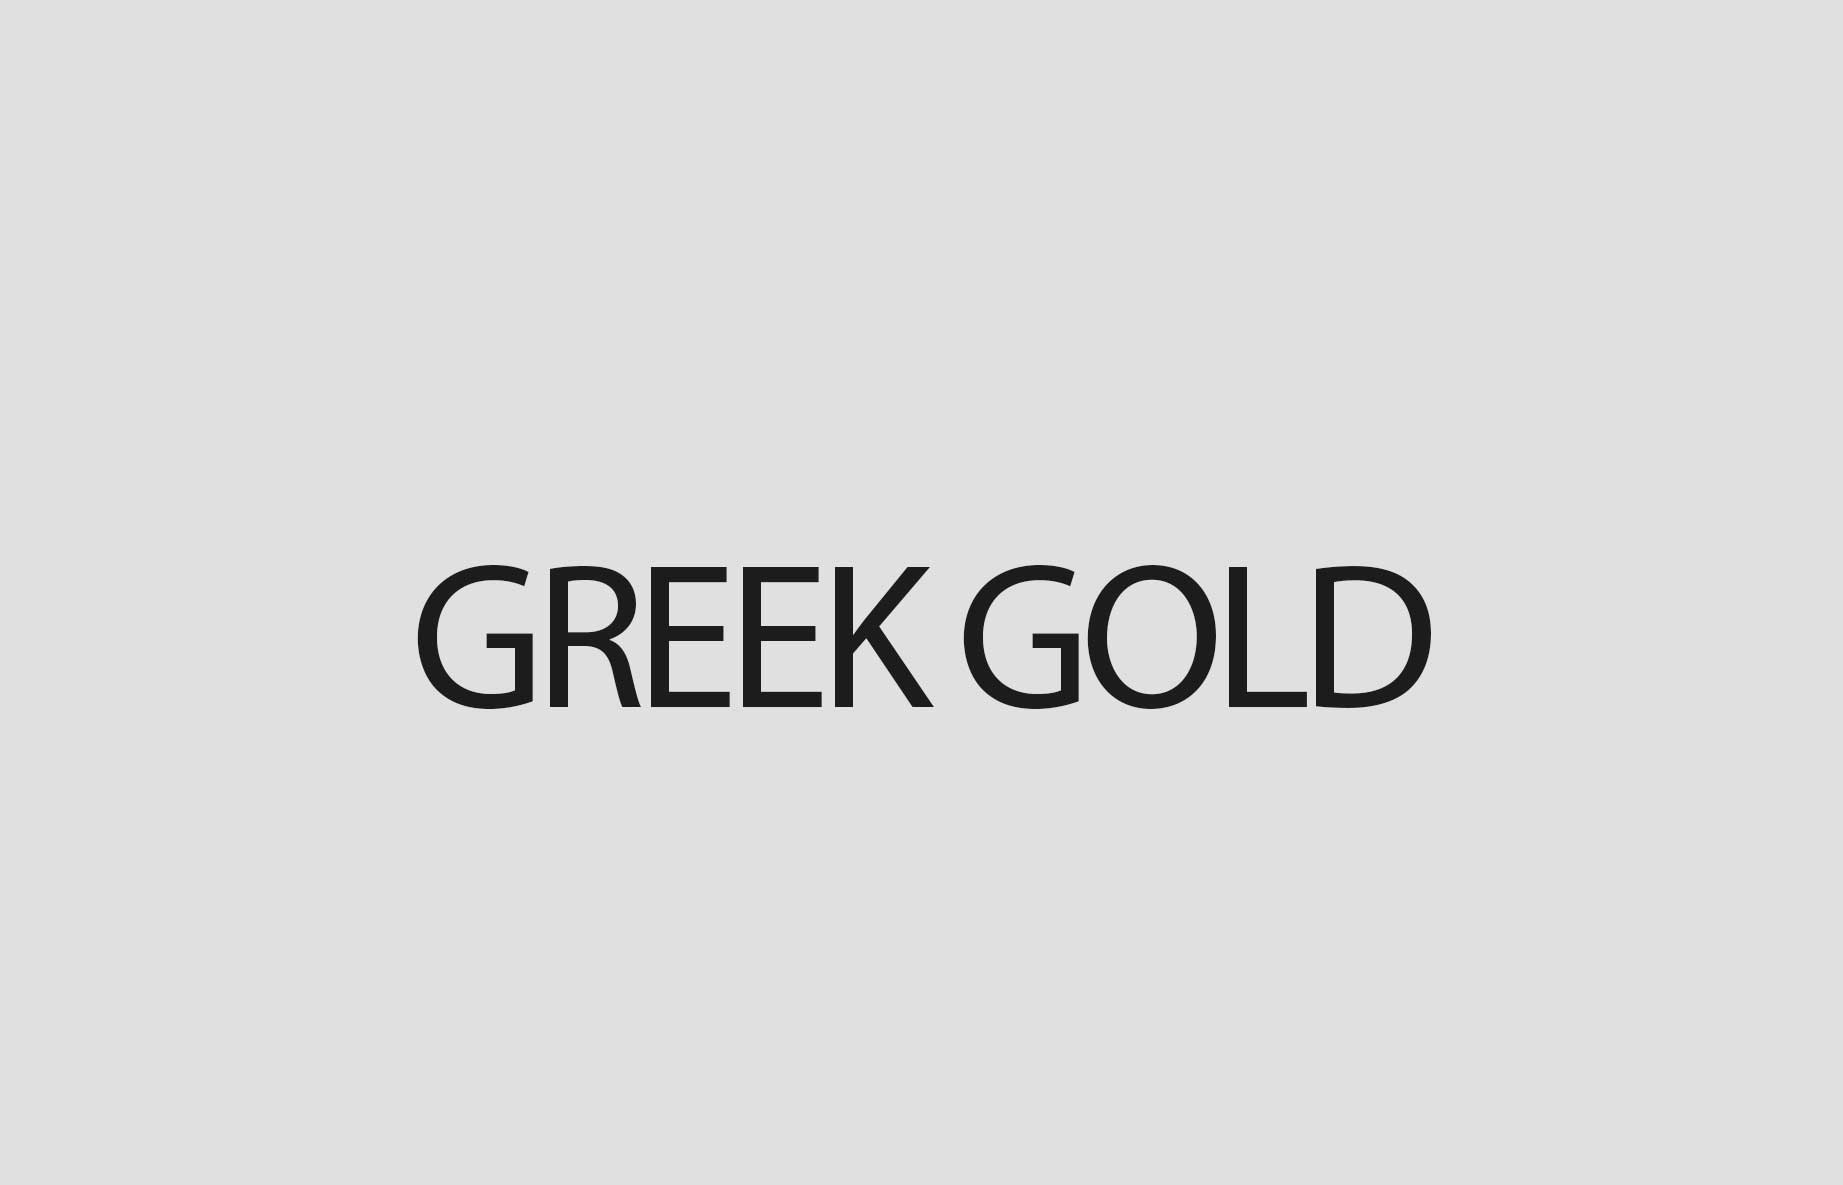 Greek gold